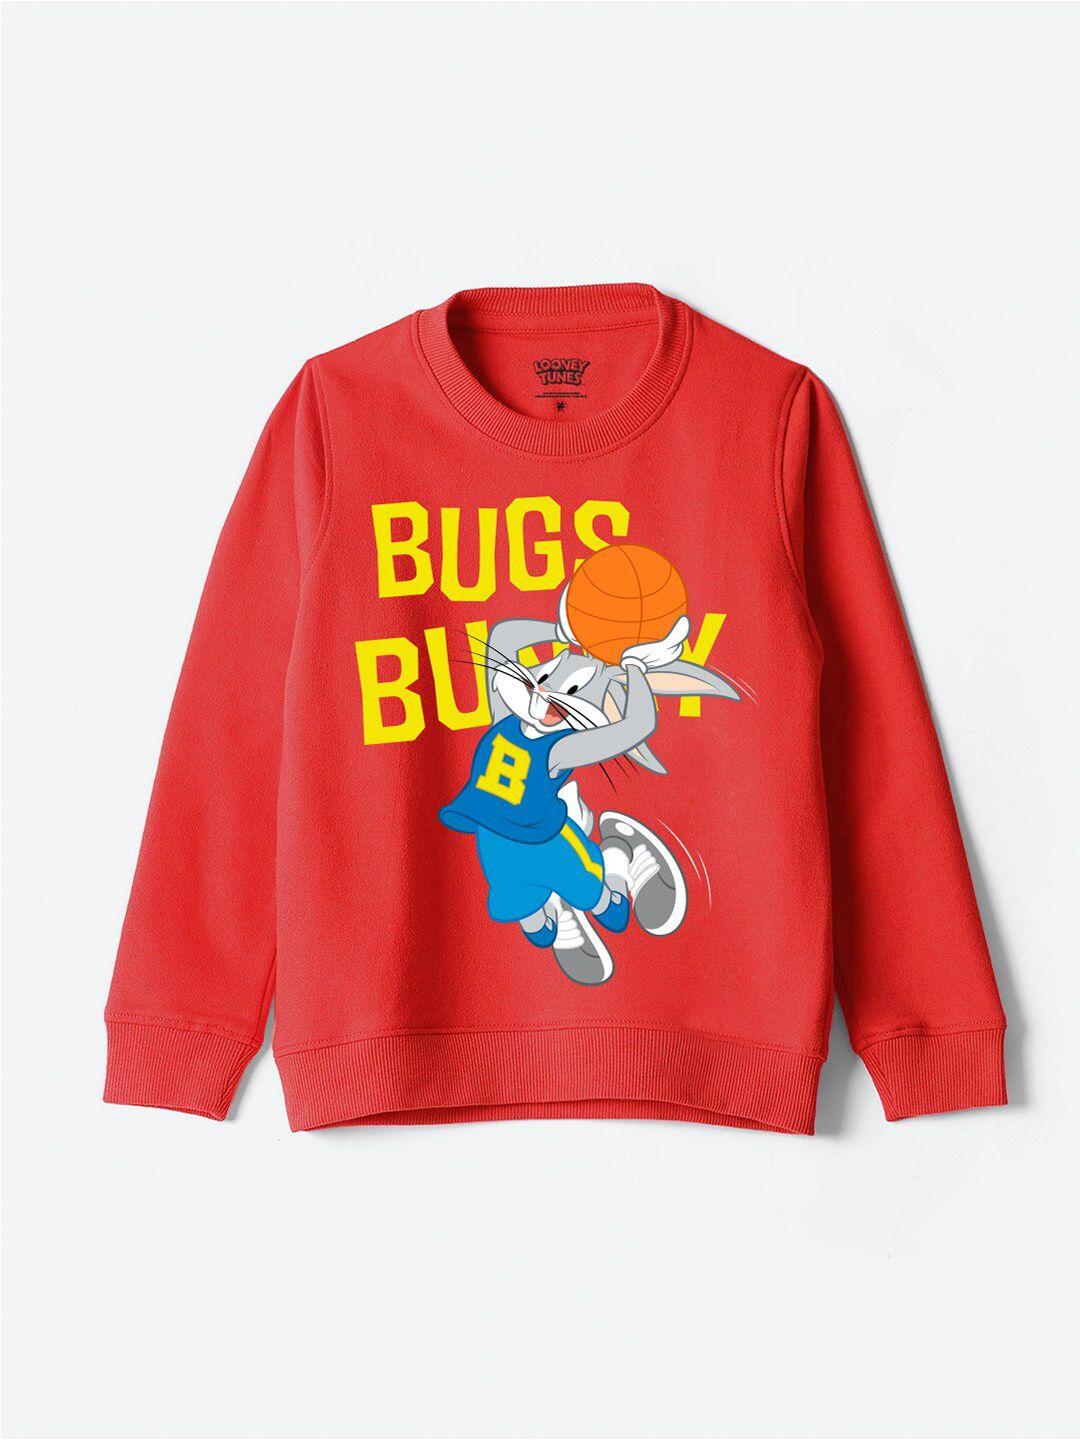 yk-warner-bros-kids-humour-and-comic-bugs-bunny-printed-pullover-sweatshirt